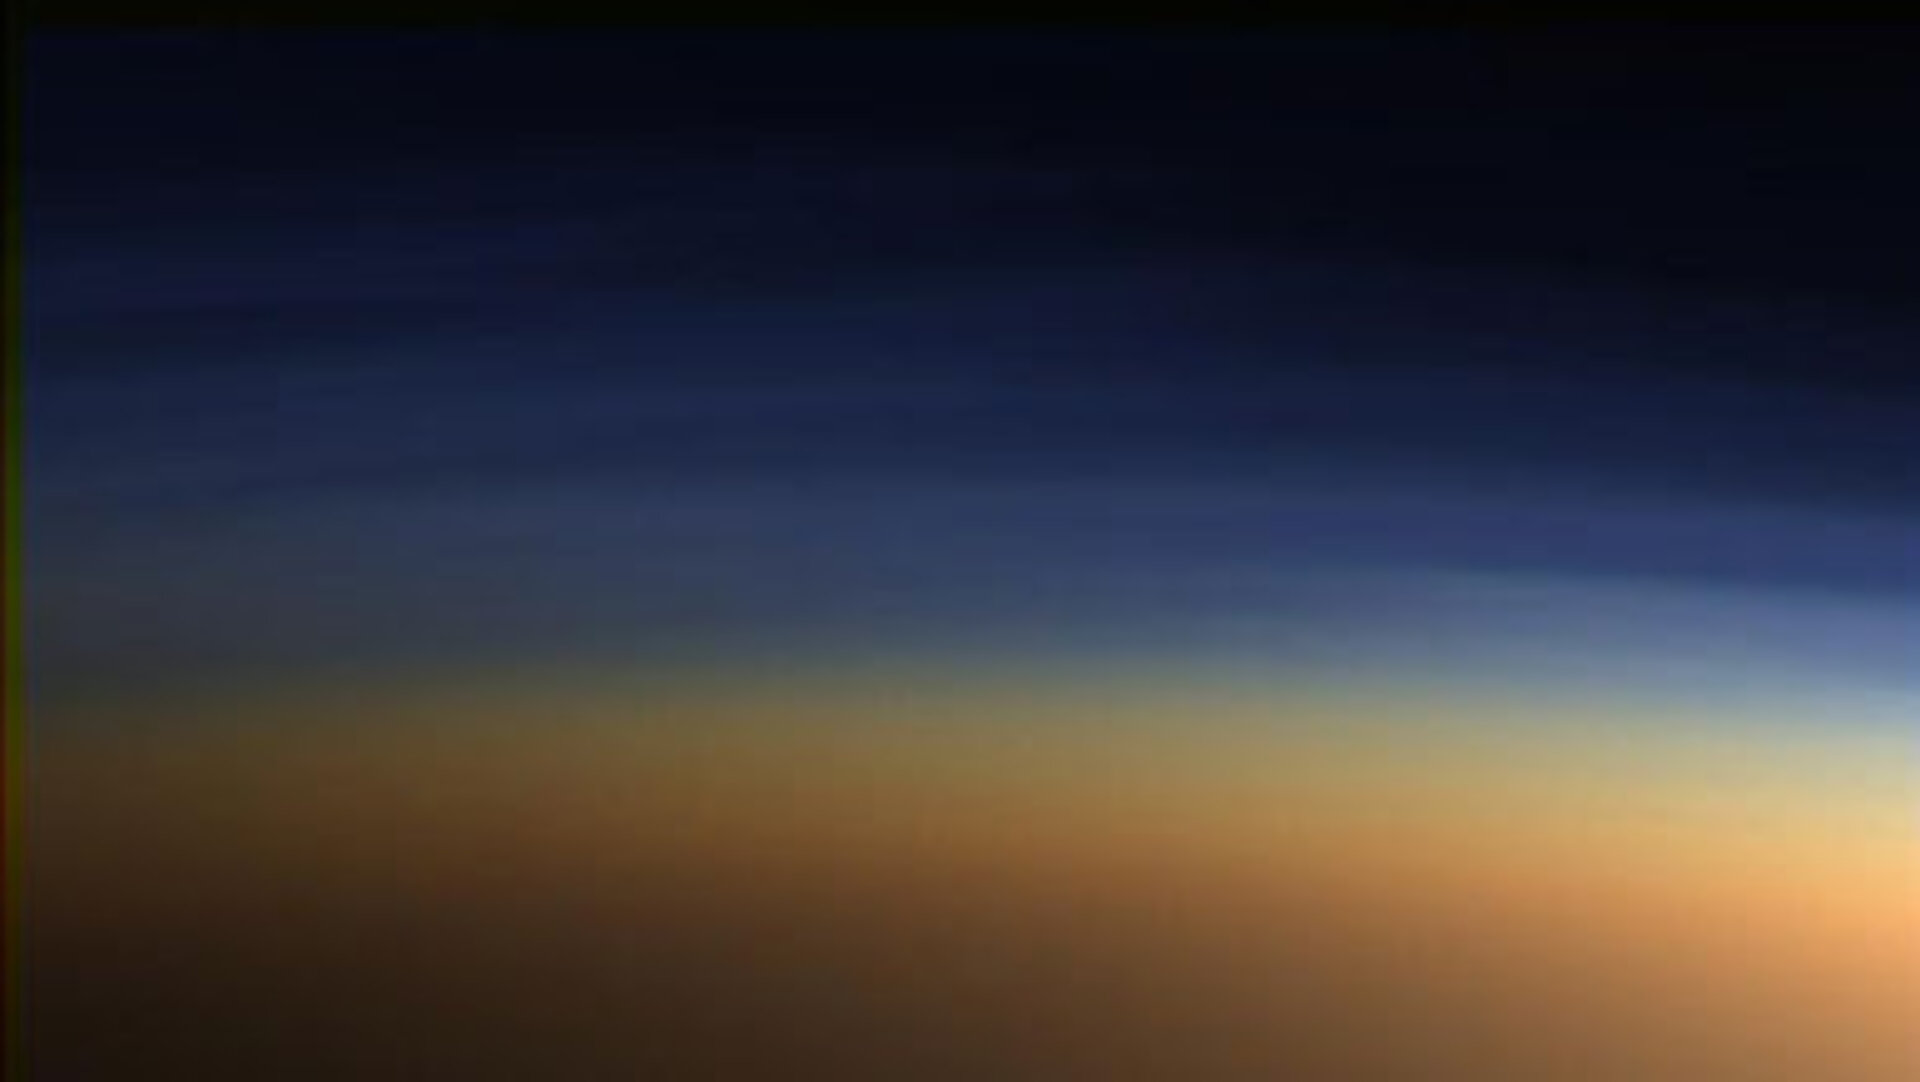 Titan's complex  atmosphere